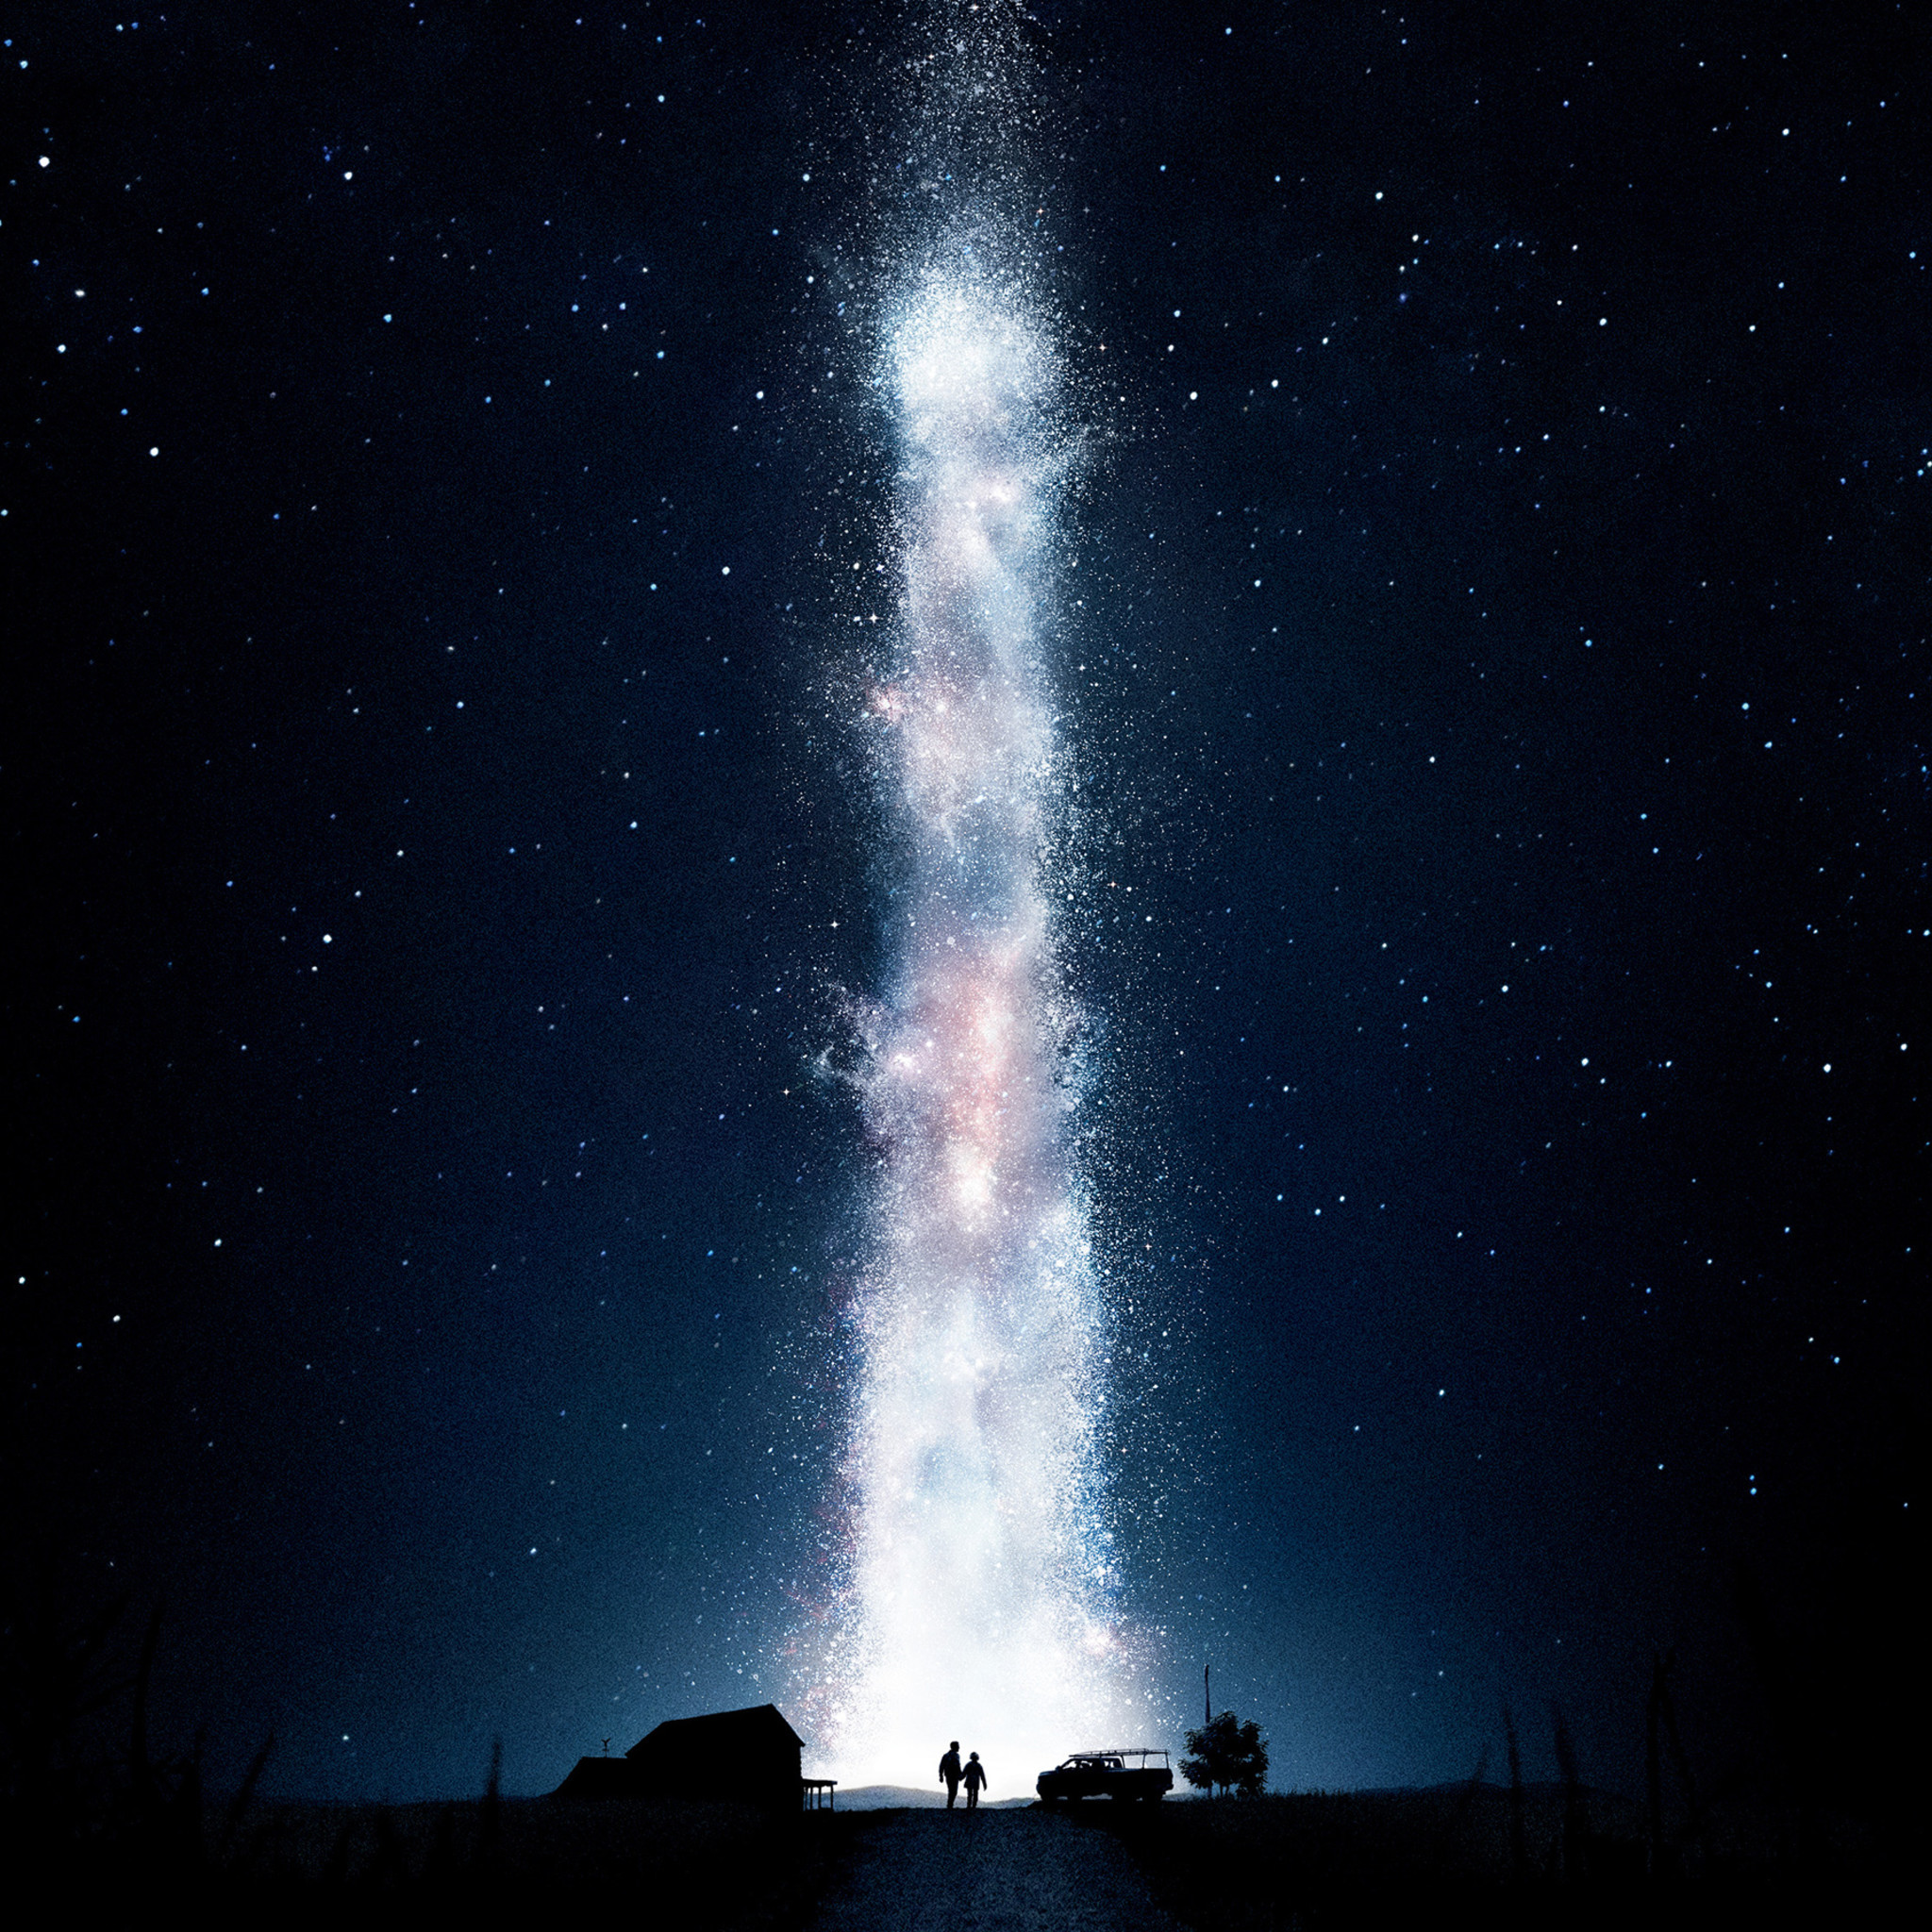 Interstellar 2014 – movie with hundreds of stars